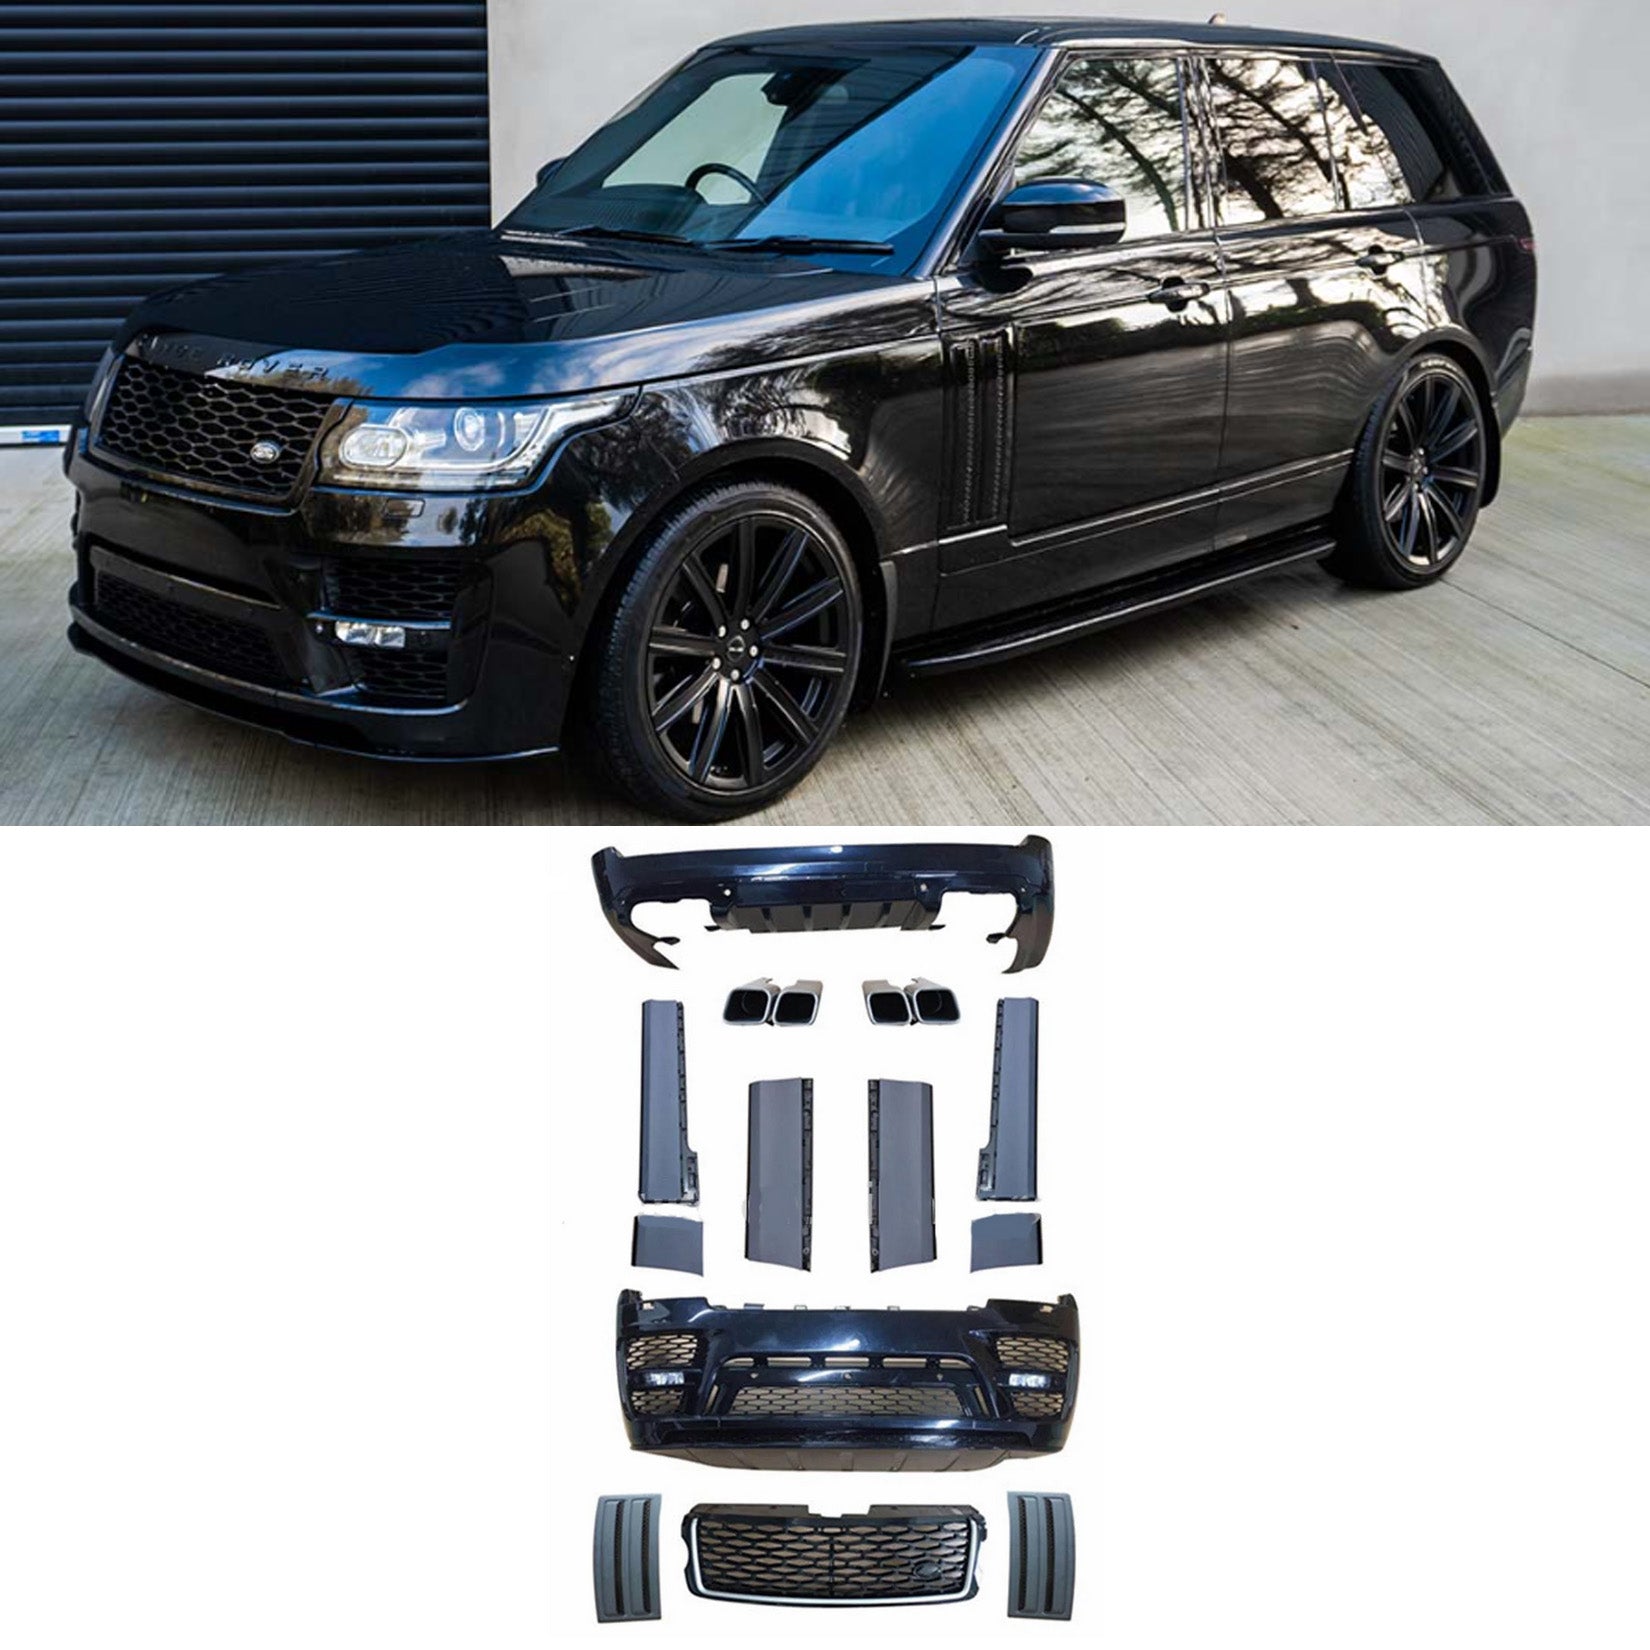 Range Rover Vogue 2013-2017 – Svo Style Body Kit Upgrade